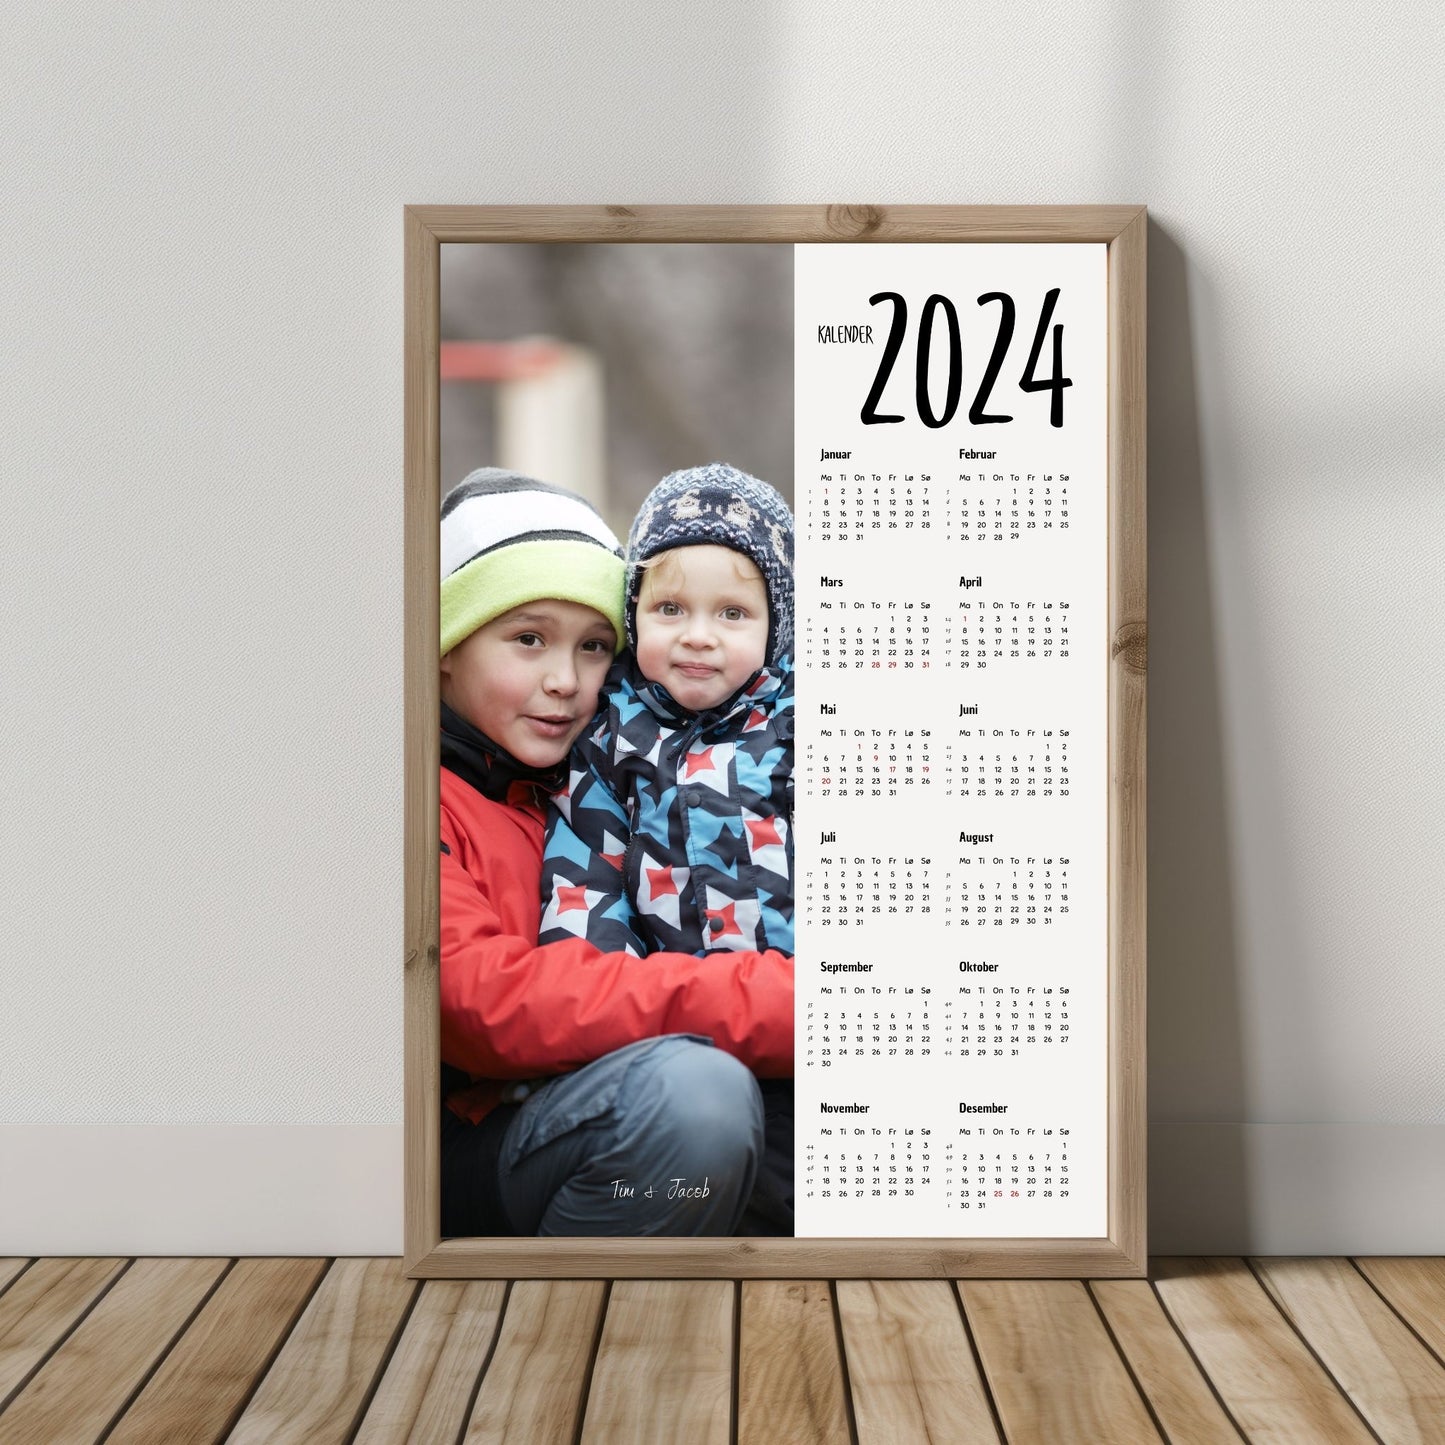 Kalender 2024 med ditt personlig bilde